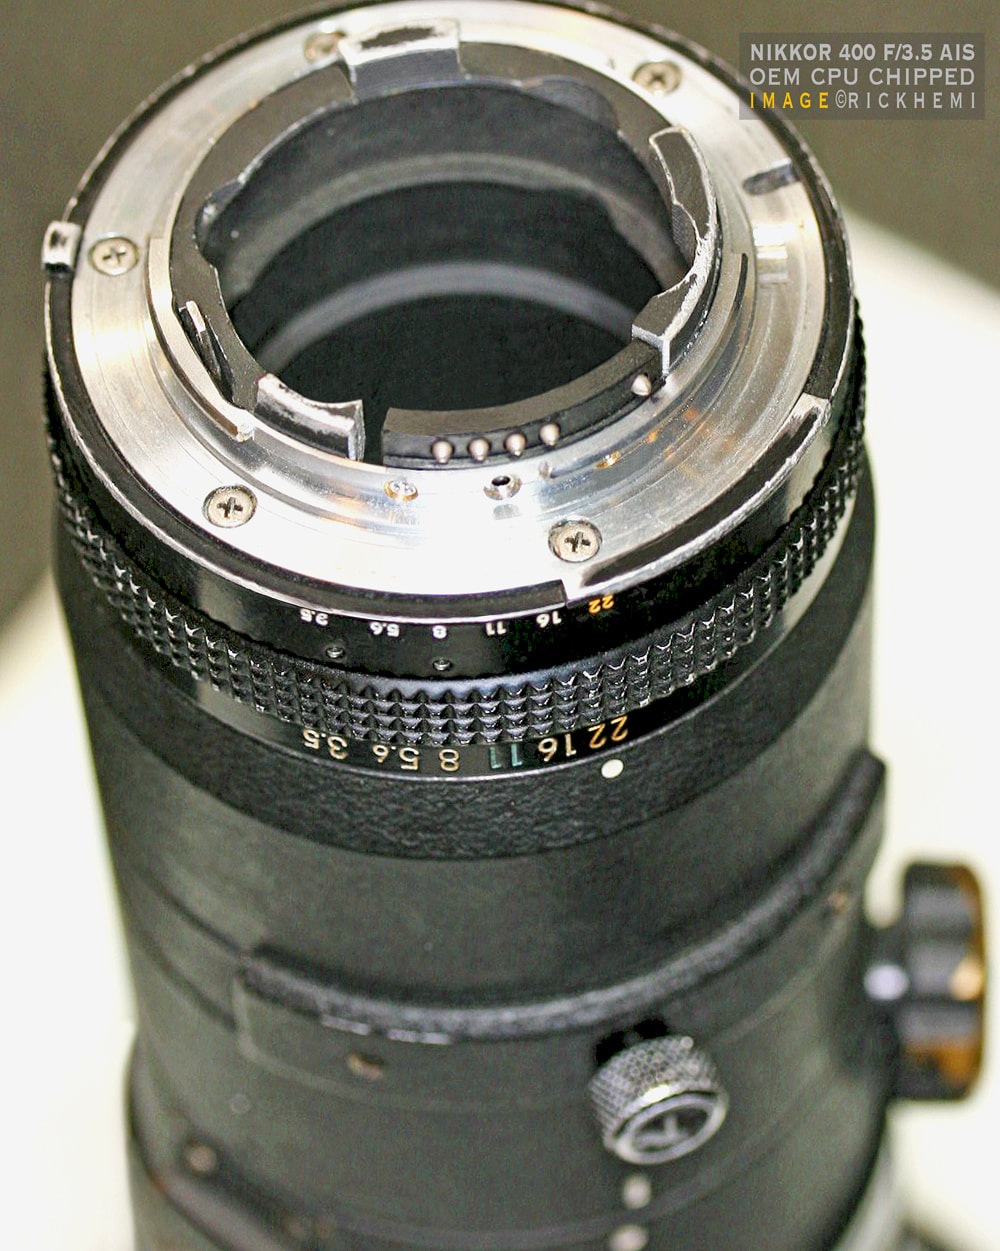 CPU chipped Nikon Nikkor 400 f/3.5 mm ED-IF AIS lens, image by rick hemi